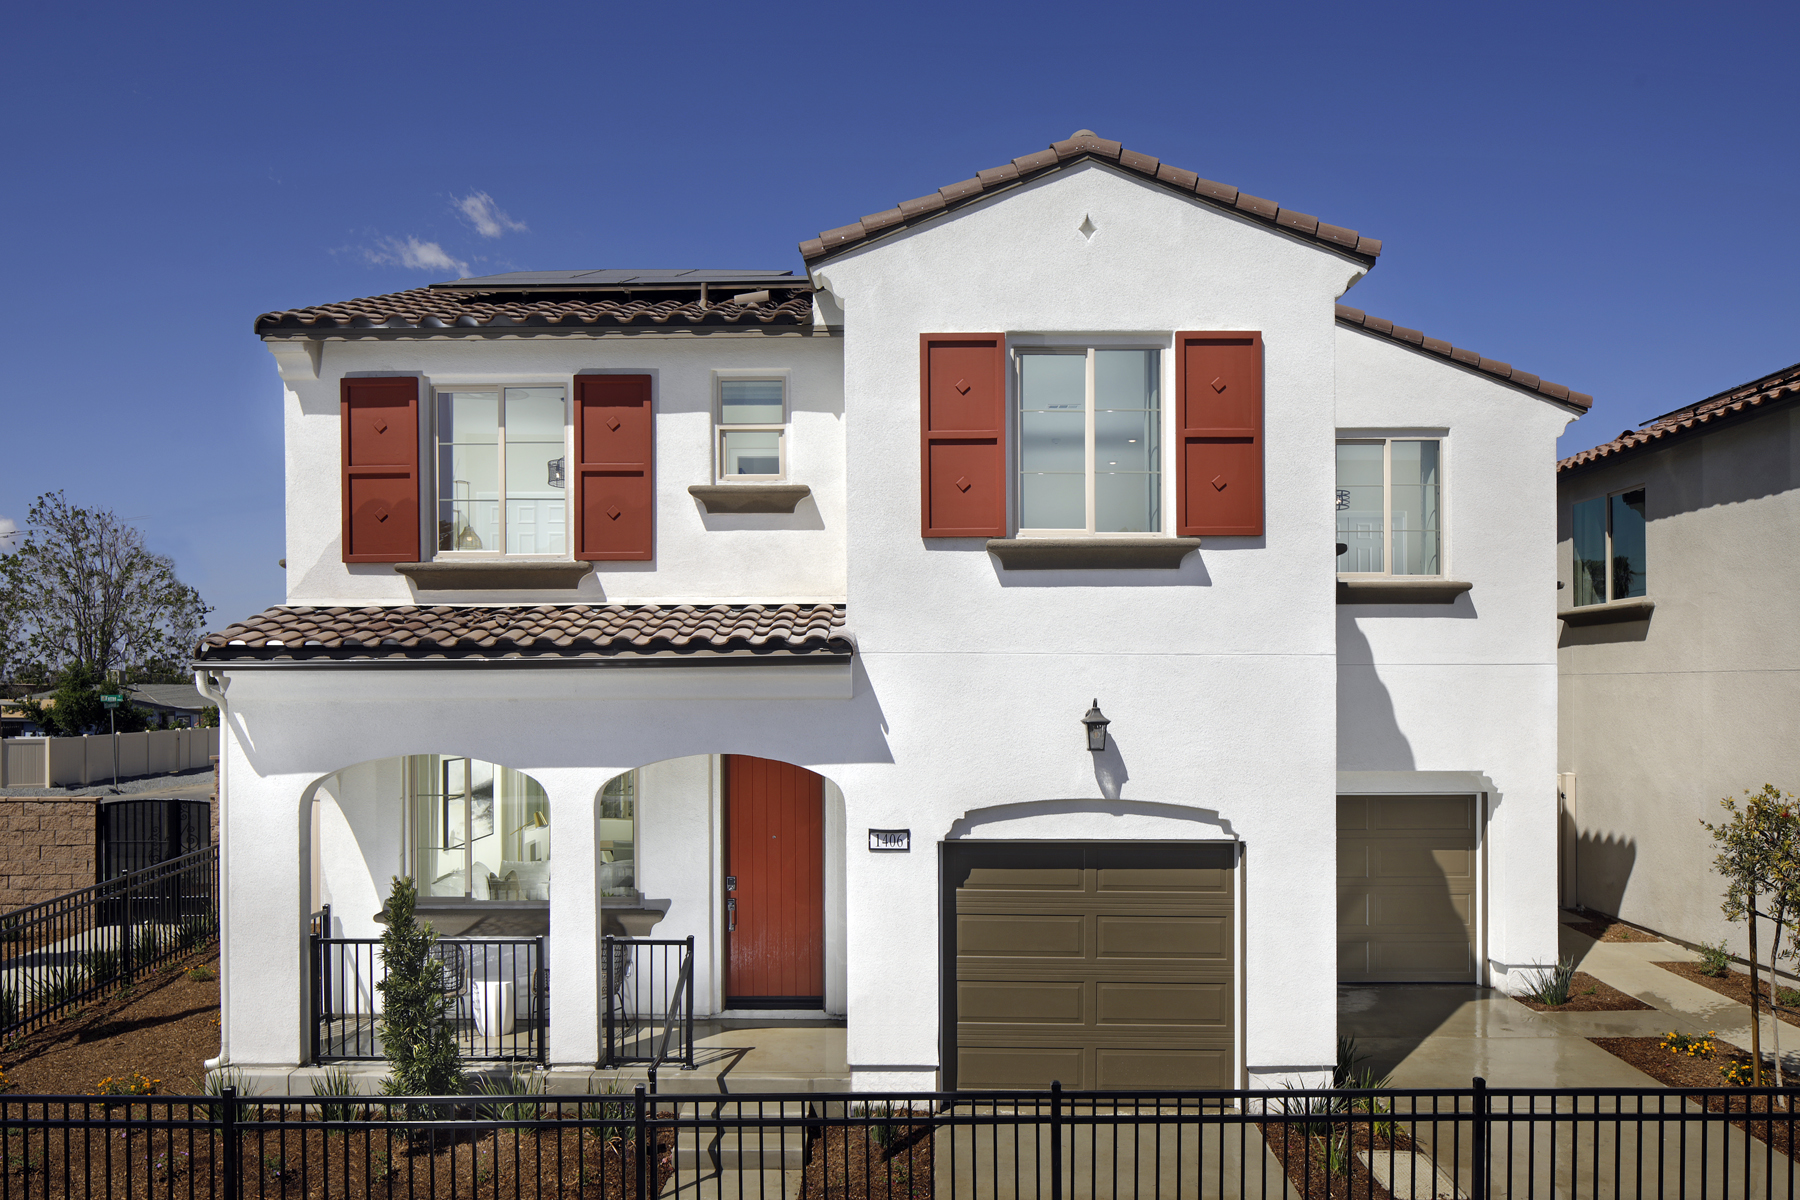 Model home exterior in San Bernardino, CA